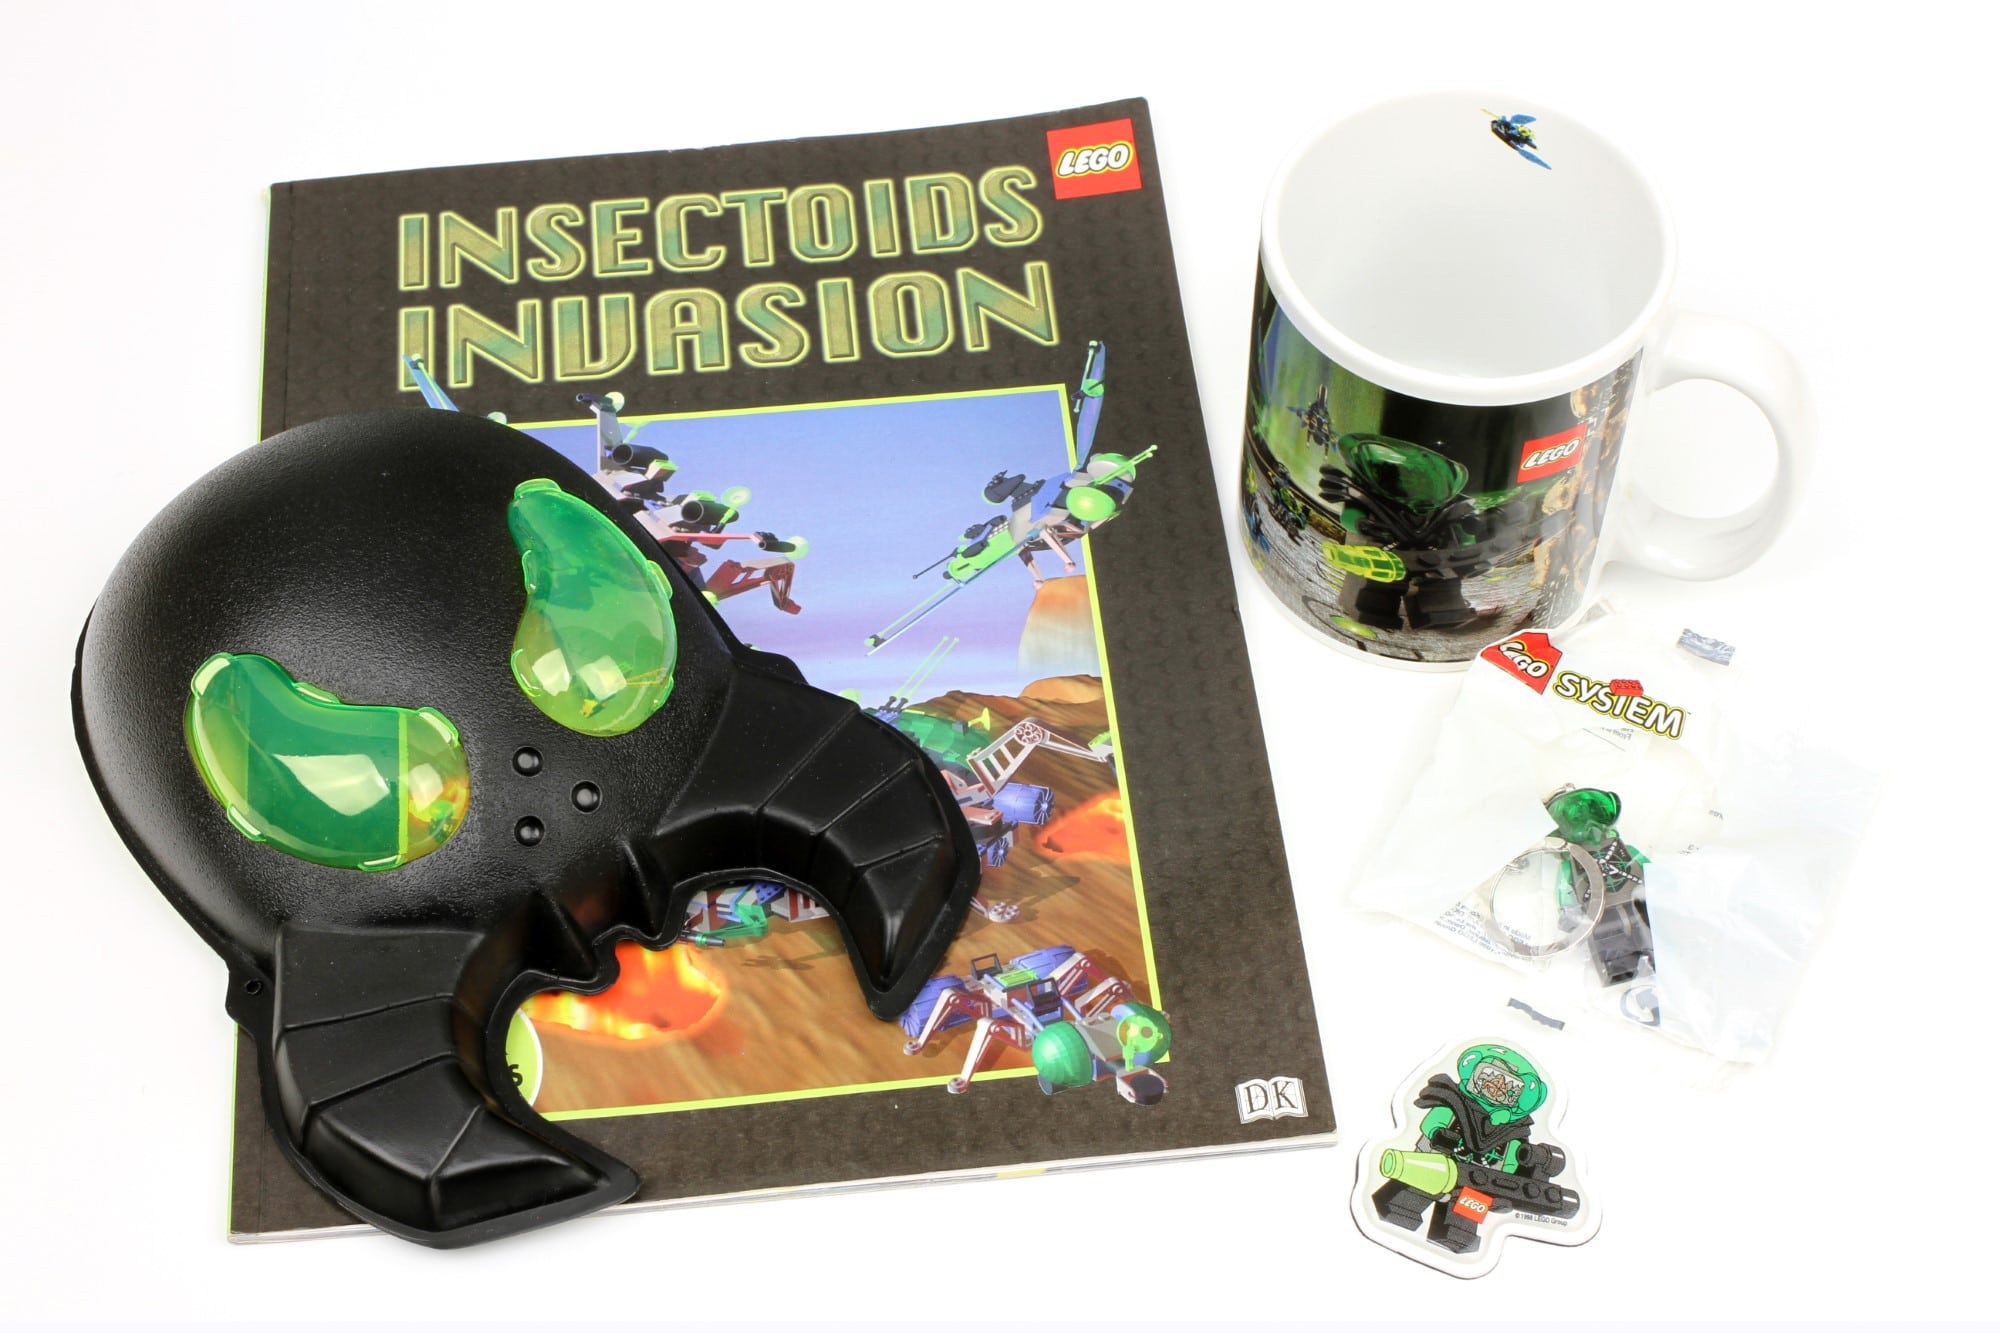 LEGO Insectoids Merchandise